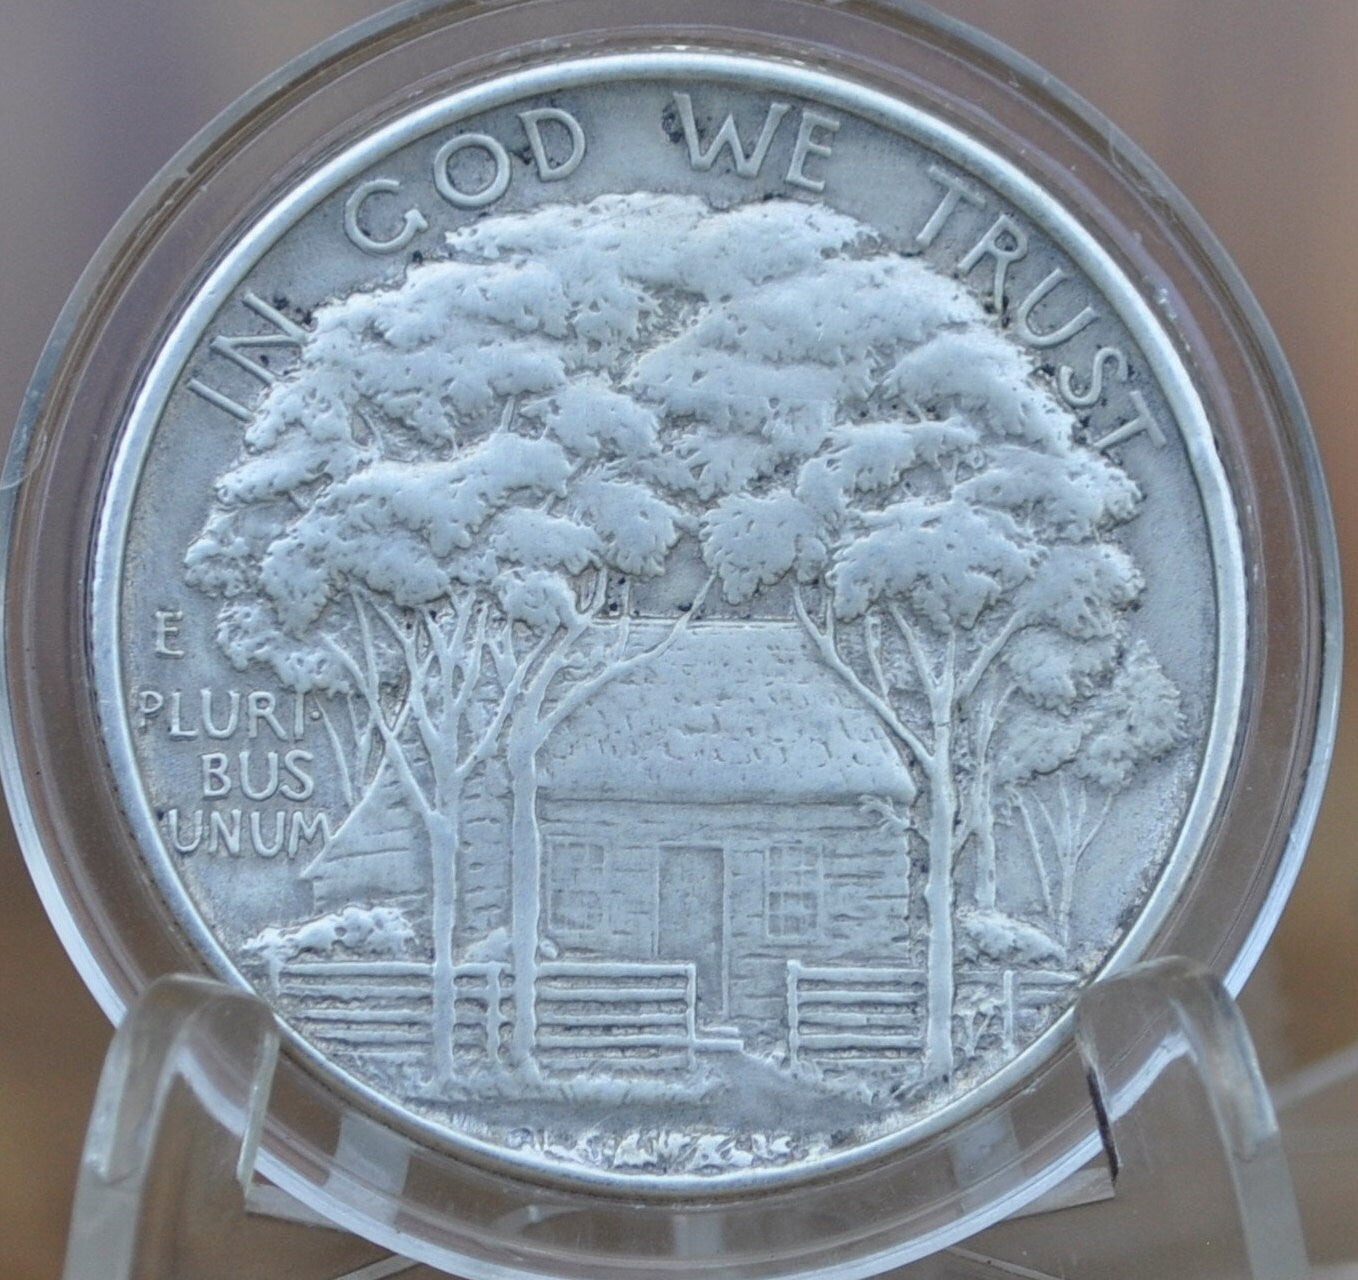 Authentic 1922 Grant Memorial Silver Commemorative Half Dollar - XF (Extremely Fine) General Ulysses S. Grant 1922 Half Dollar Original